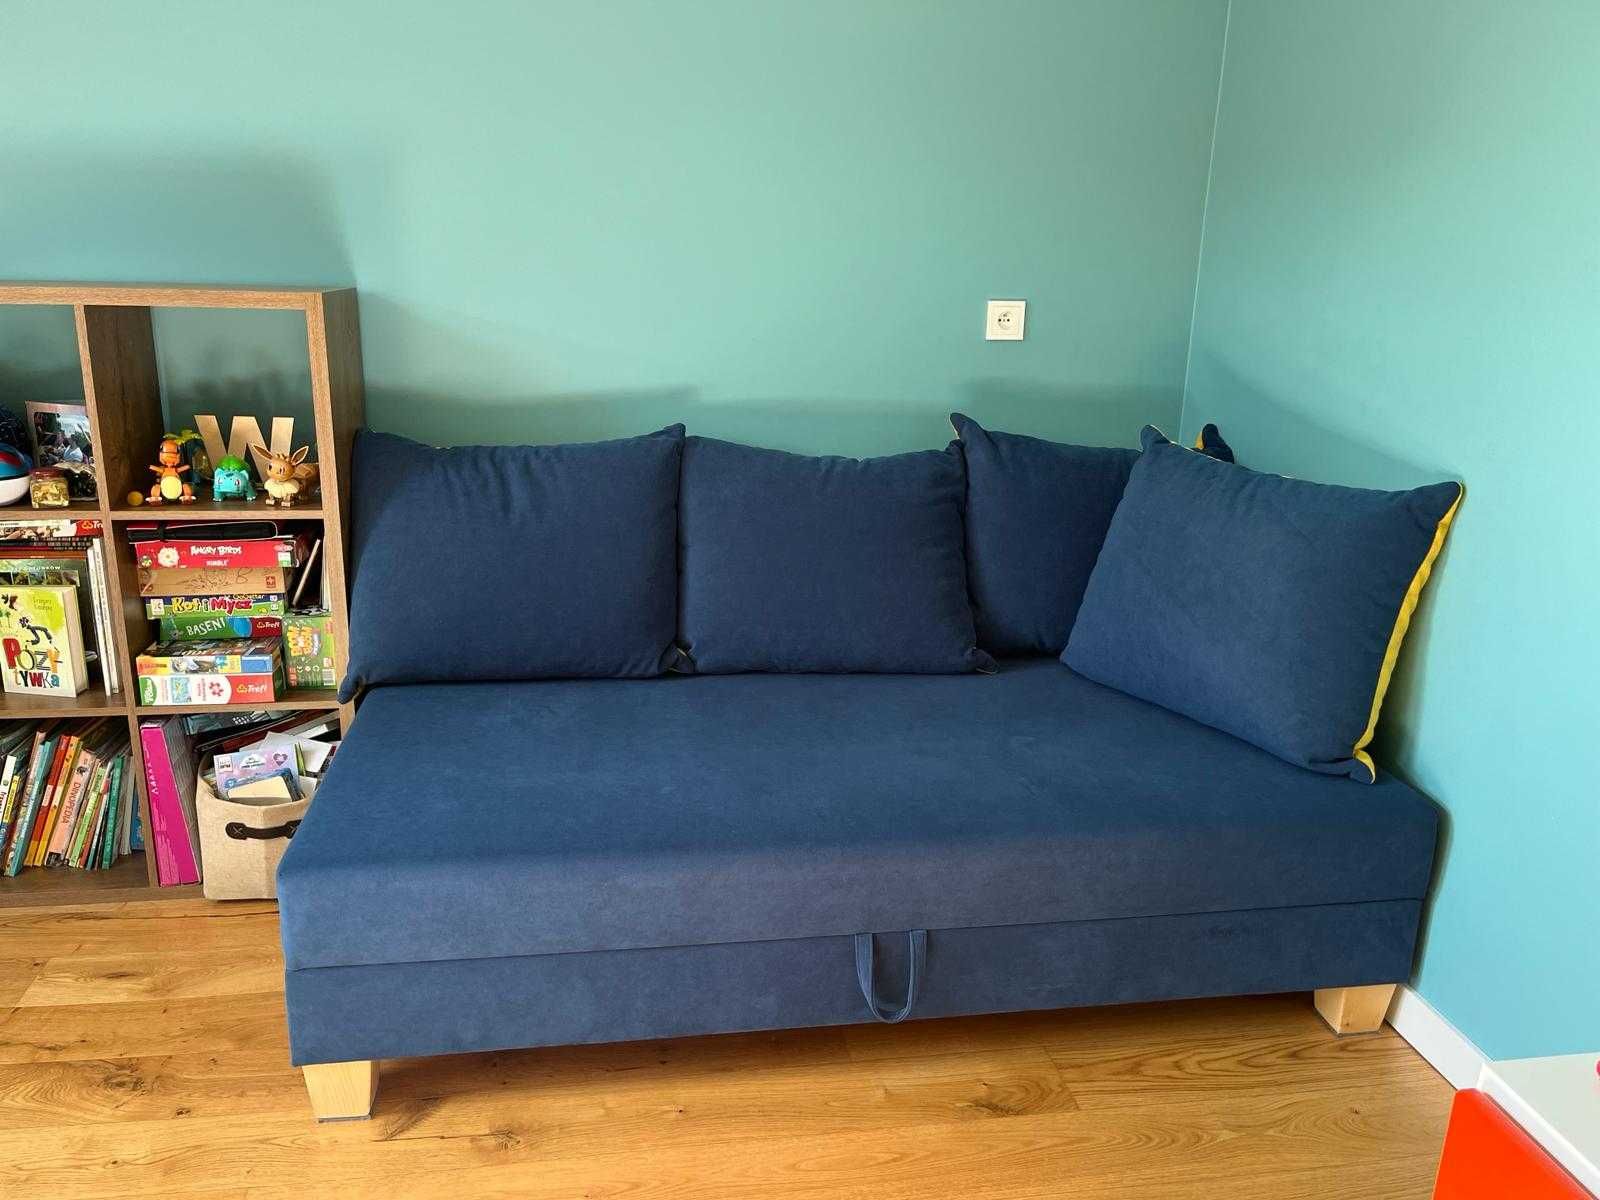 Mała sofa/kanapa dla dziecka